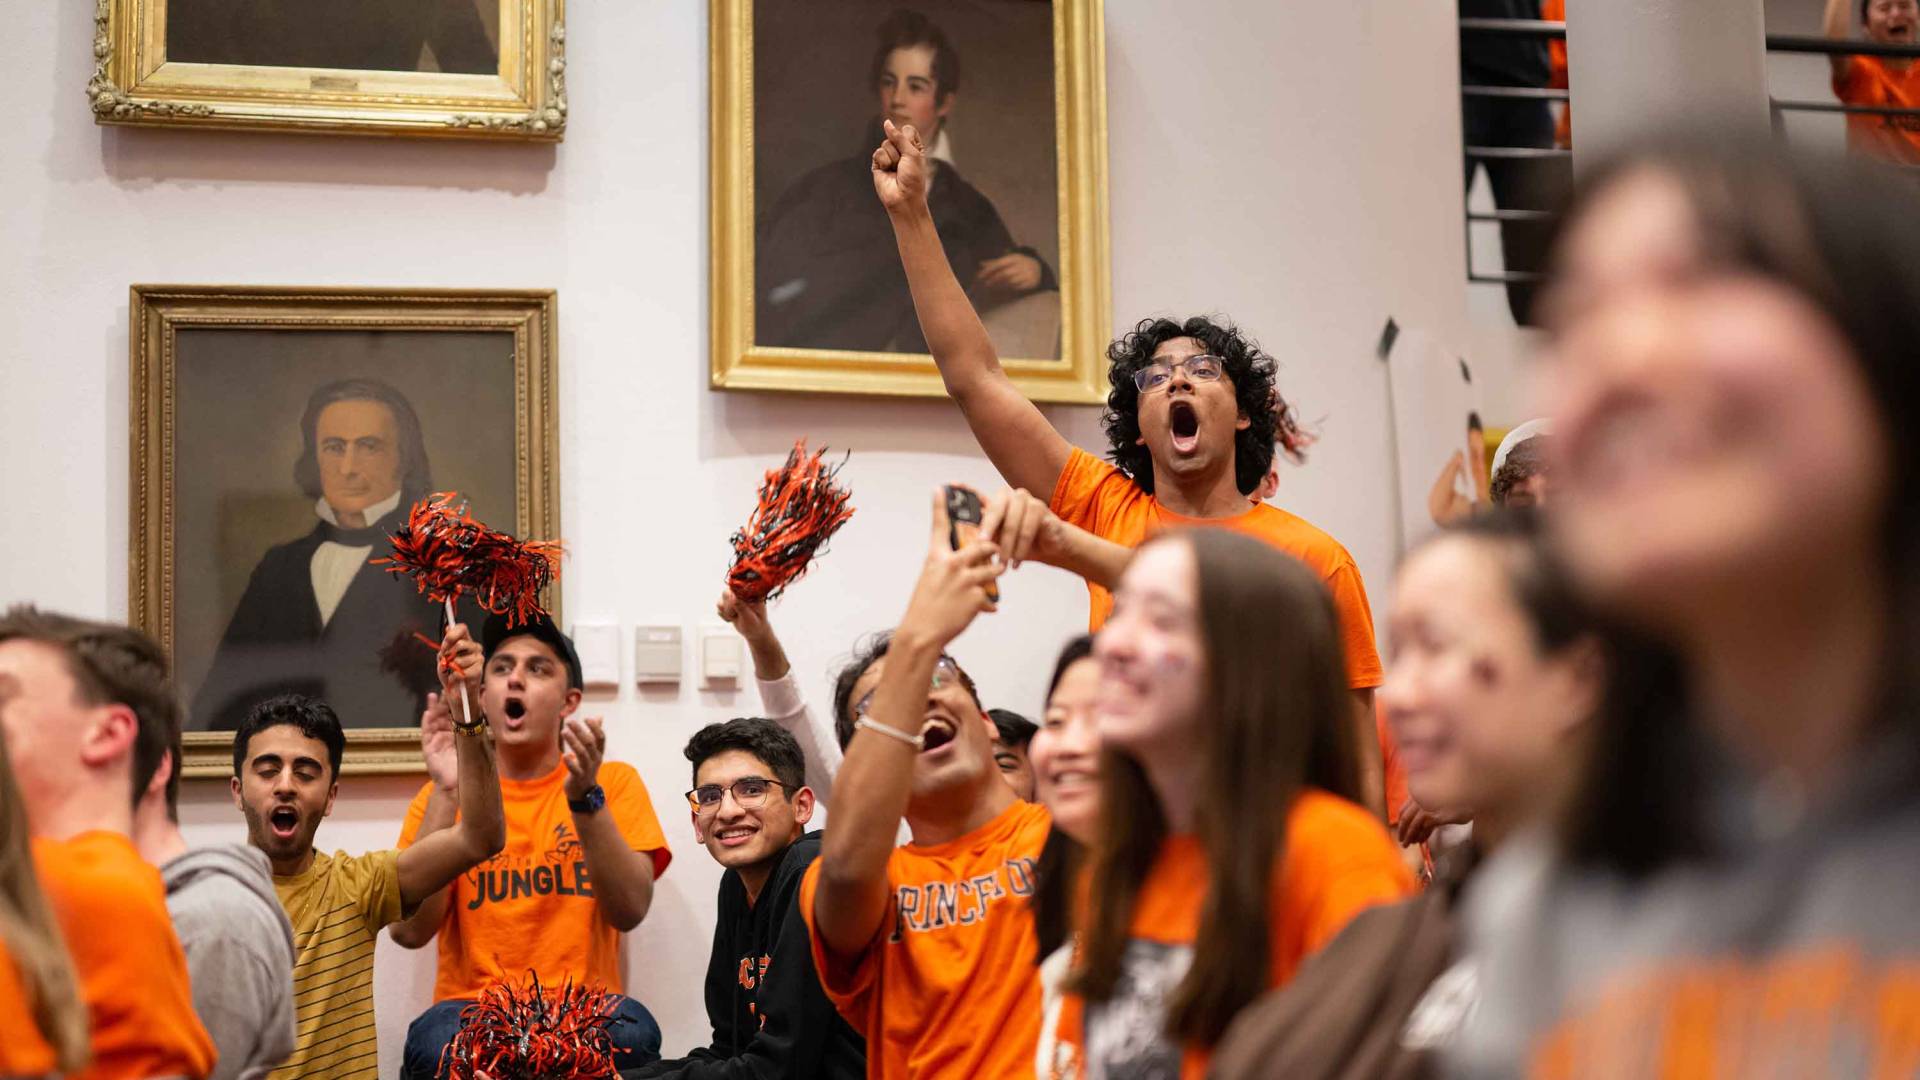 Princeton students cheering the basketball team